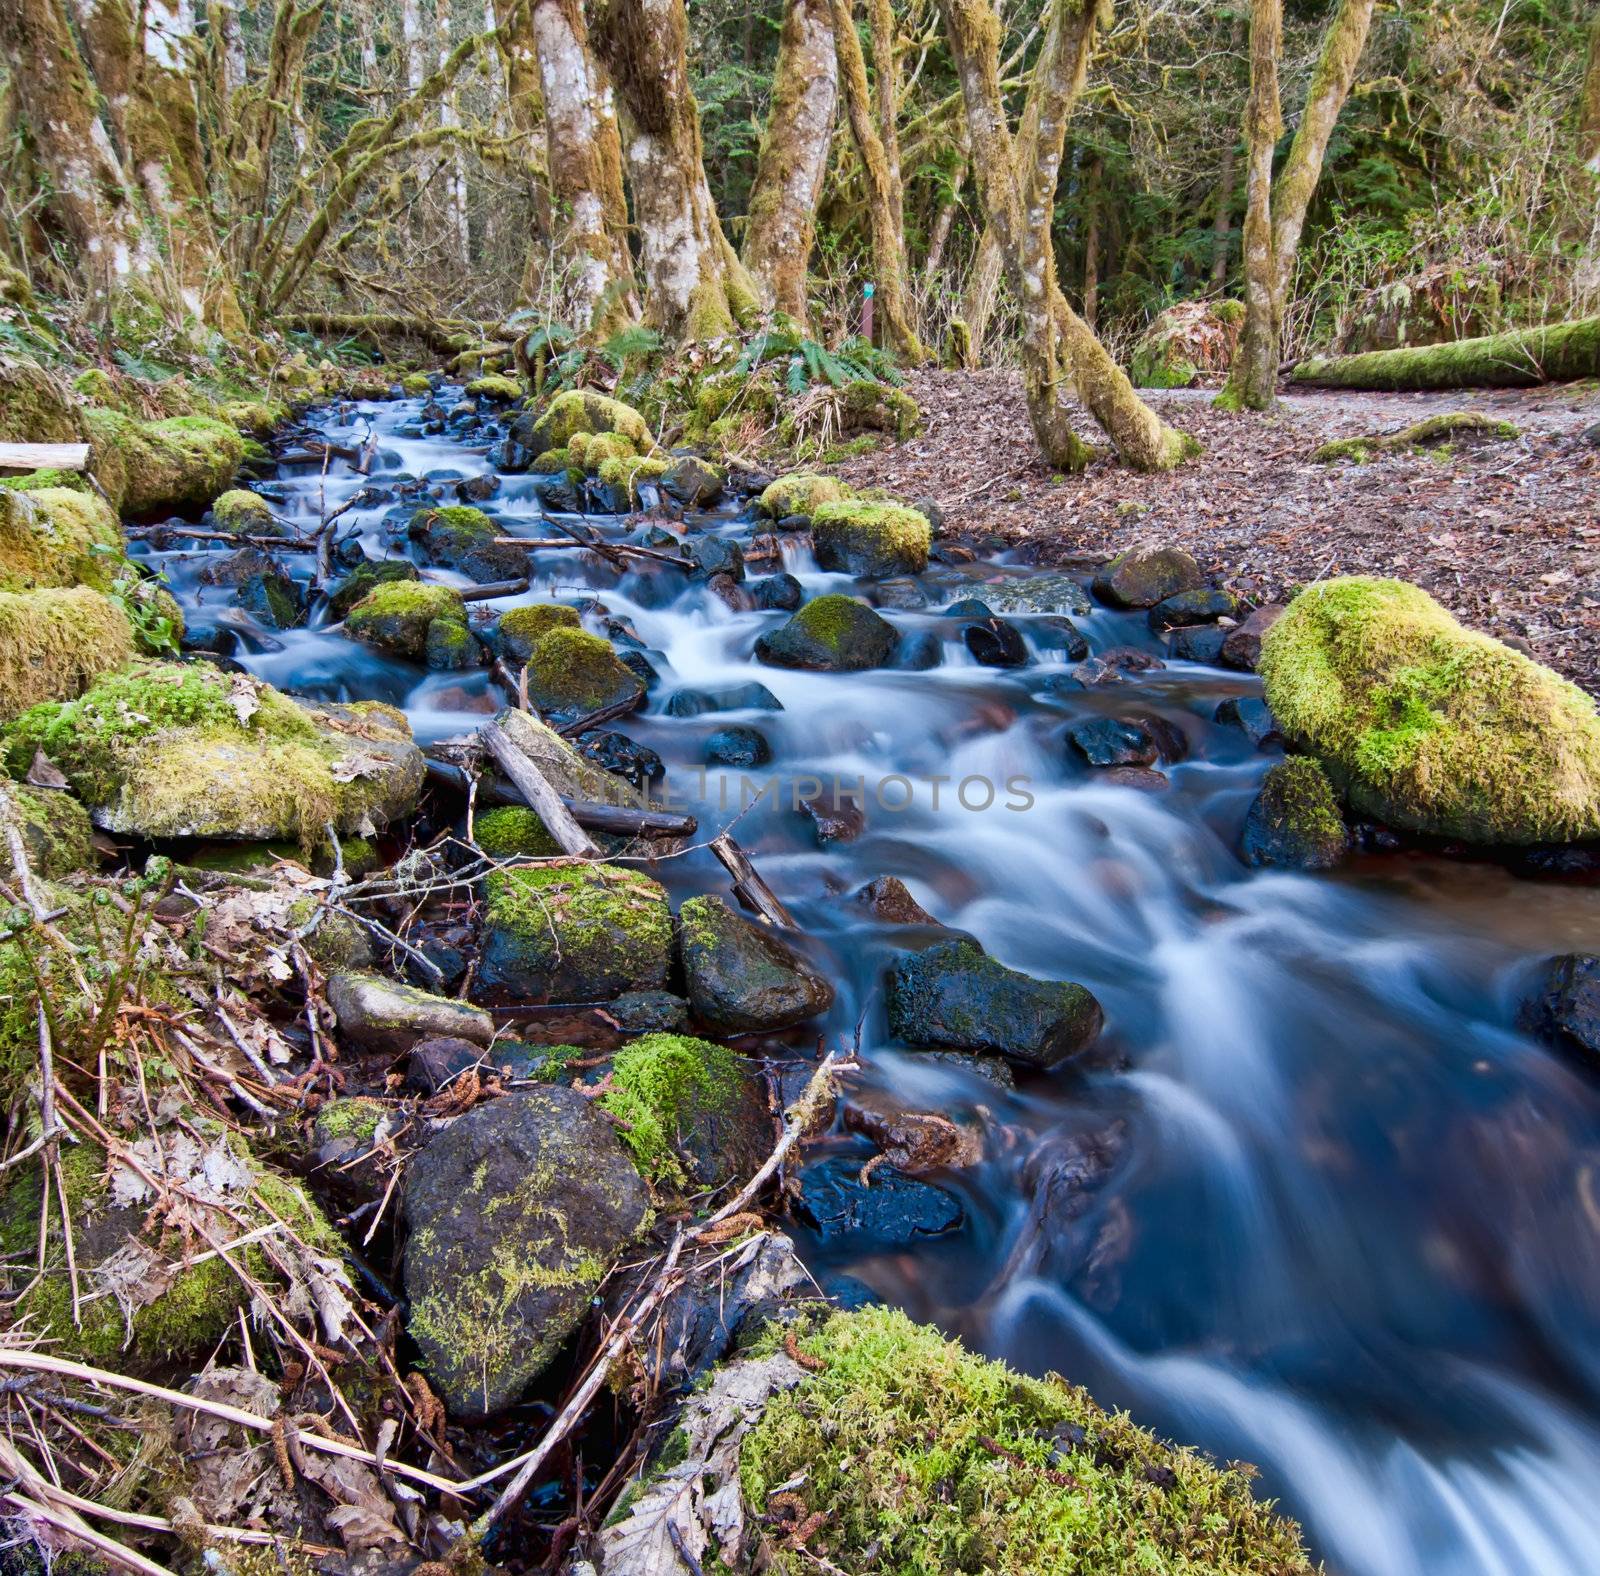 Flowing Stream With Mossy Rocks by JamesWheeler